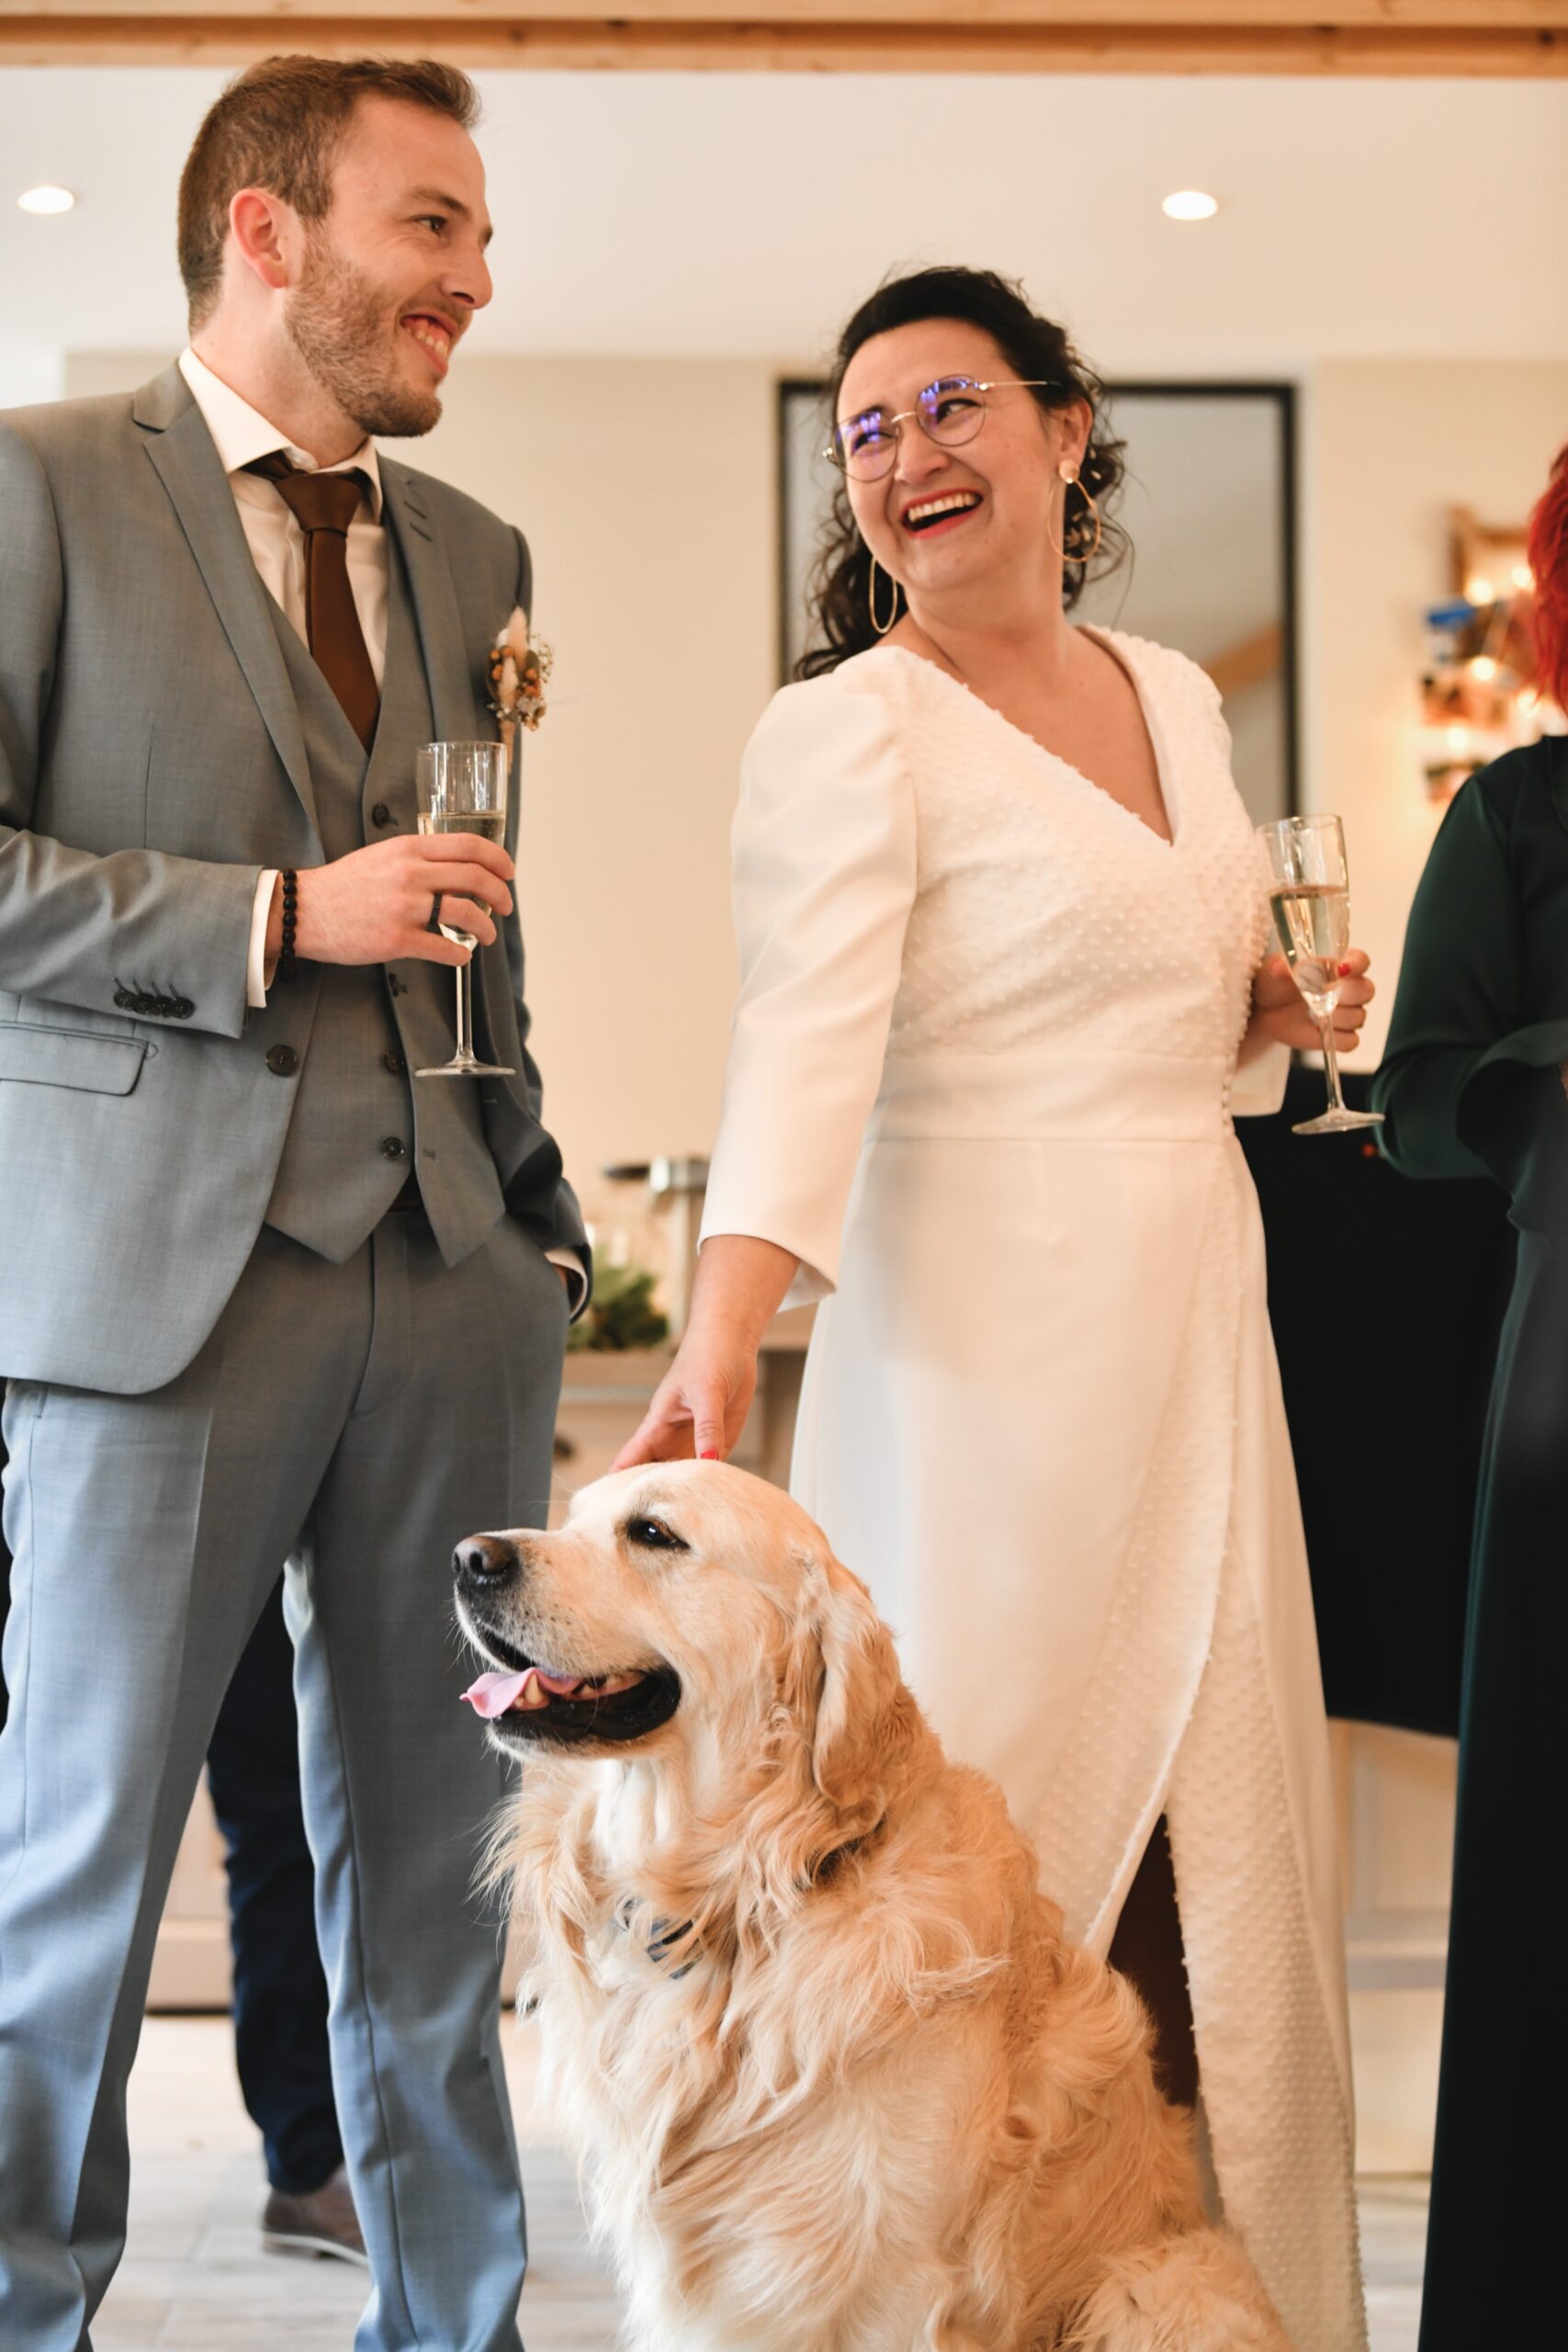 newlyweds-and-their-dog-at-the-wedding-2022-08-01-02-45-07-utc